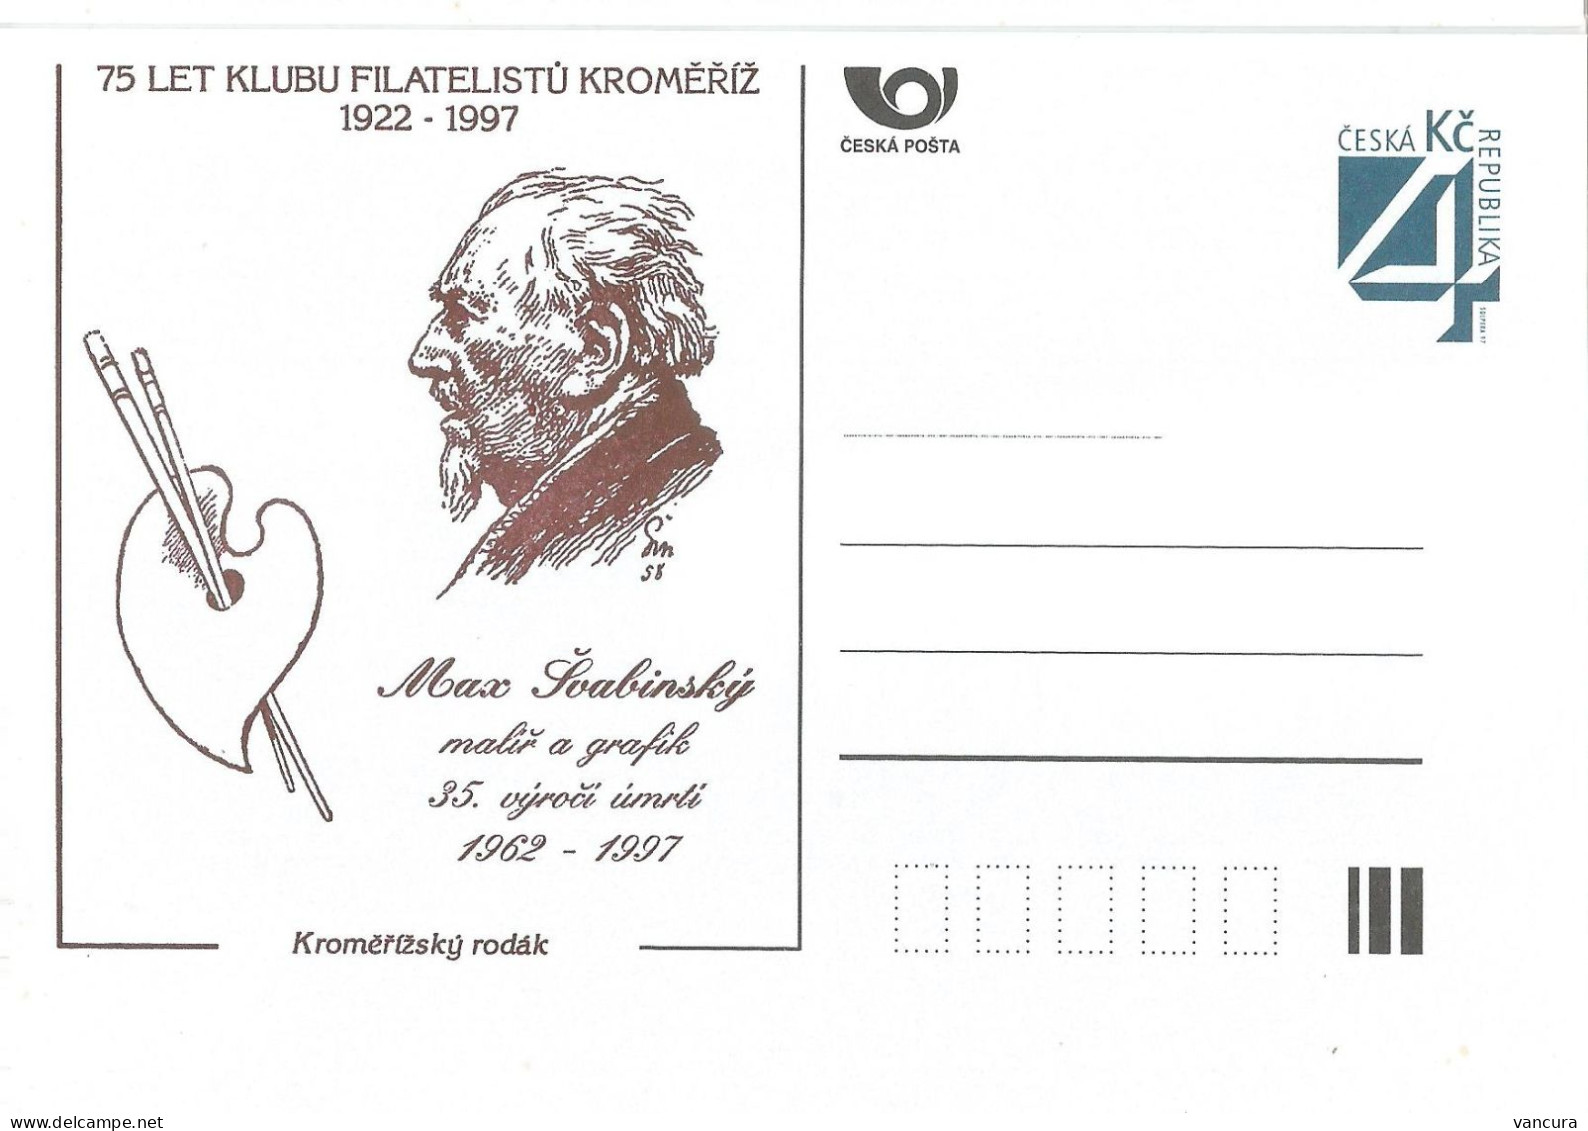 CDV C Czech Republic 75 Years Of The Kromeriz Stamp Collectors Max Svabinsky 1997 - Engravings